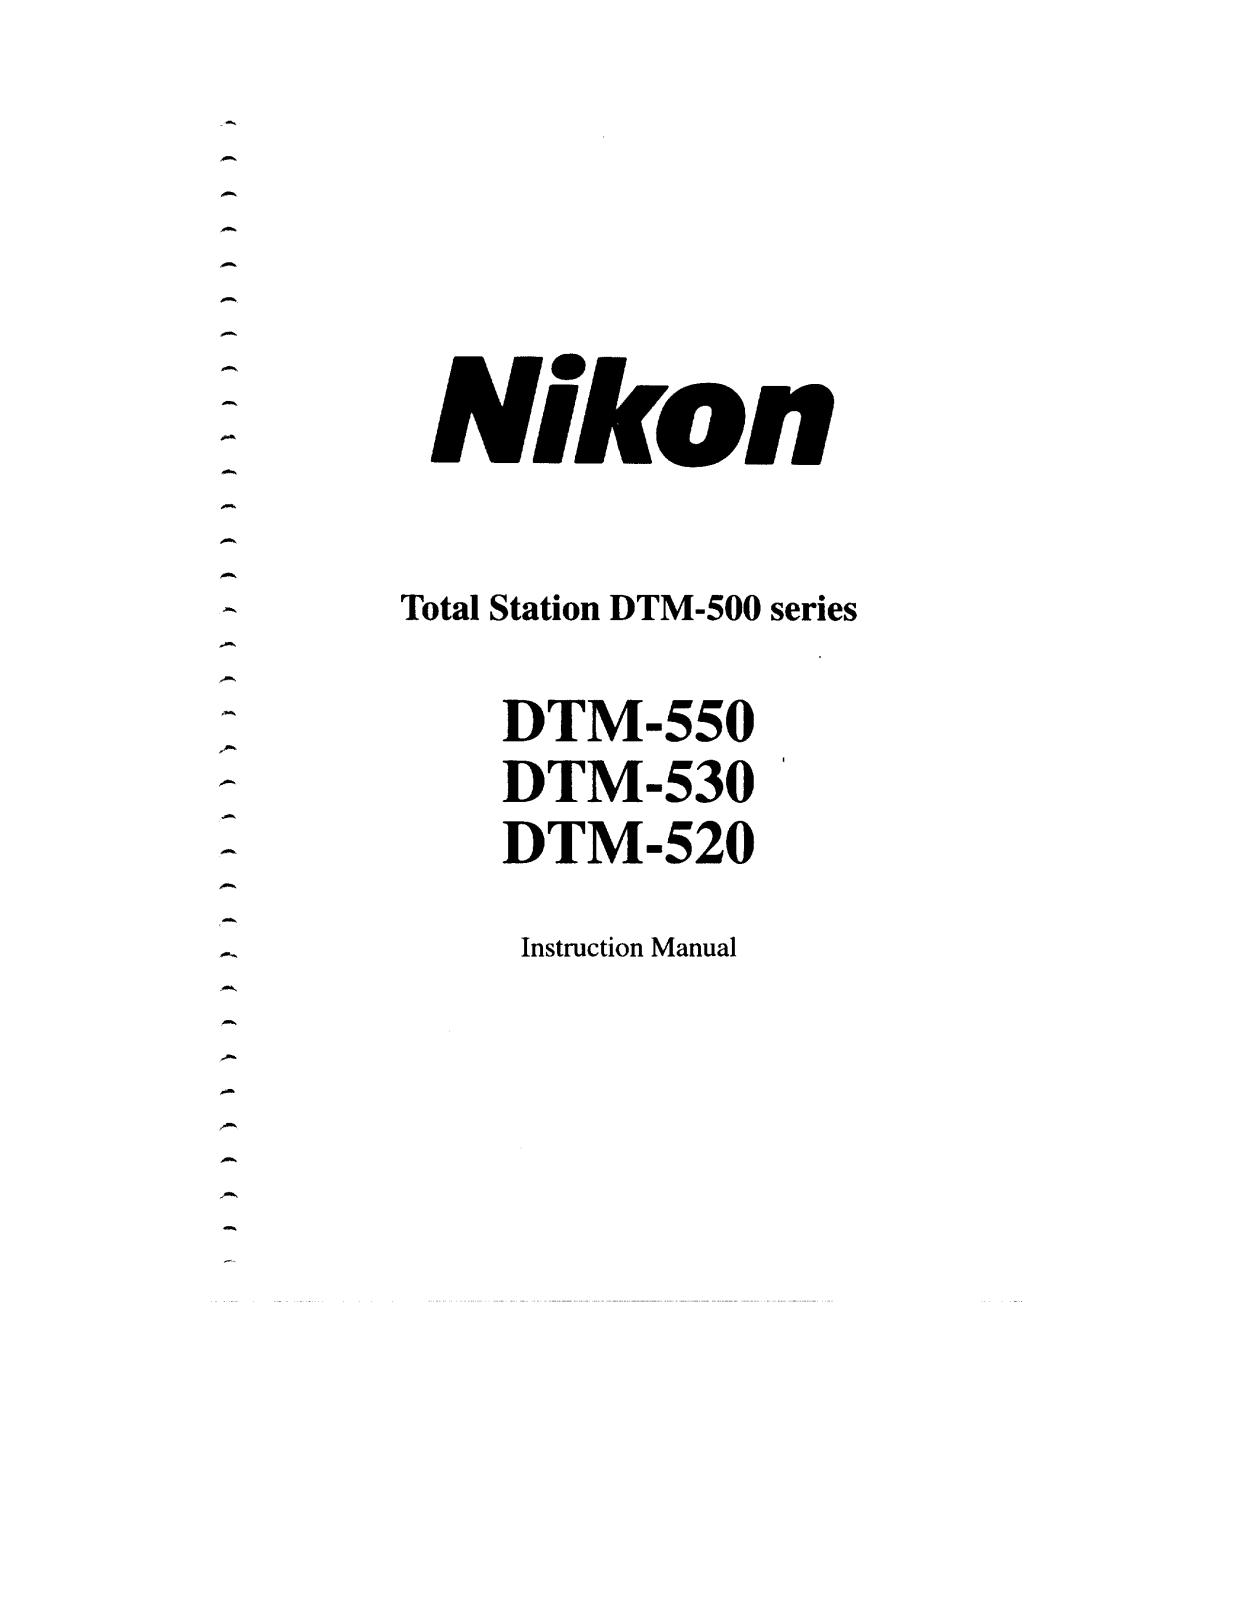 Nikon DTM-520, DTM-550, DTM-530 User Manual